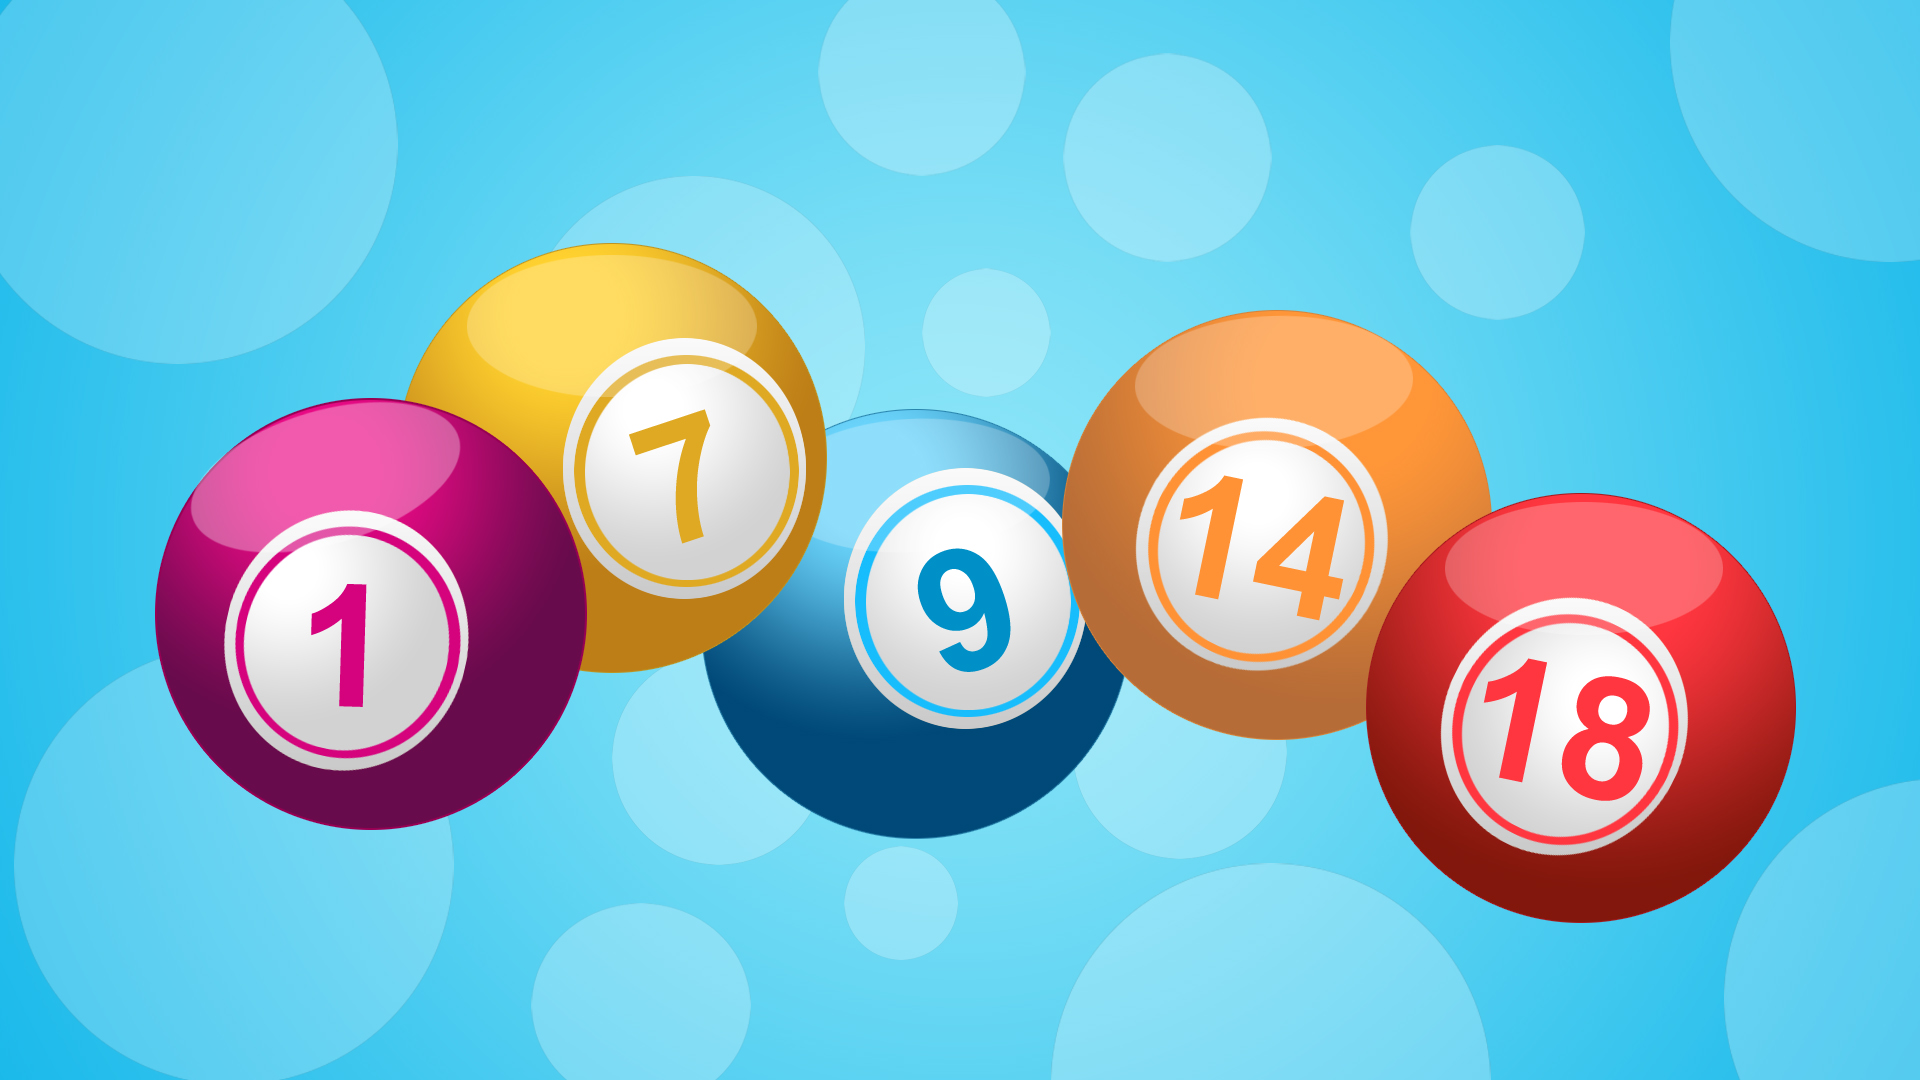 free-bingo-balls-download-free-bingo-balls-png-images-free-cliparts